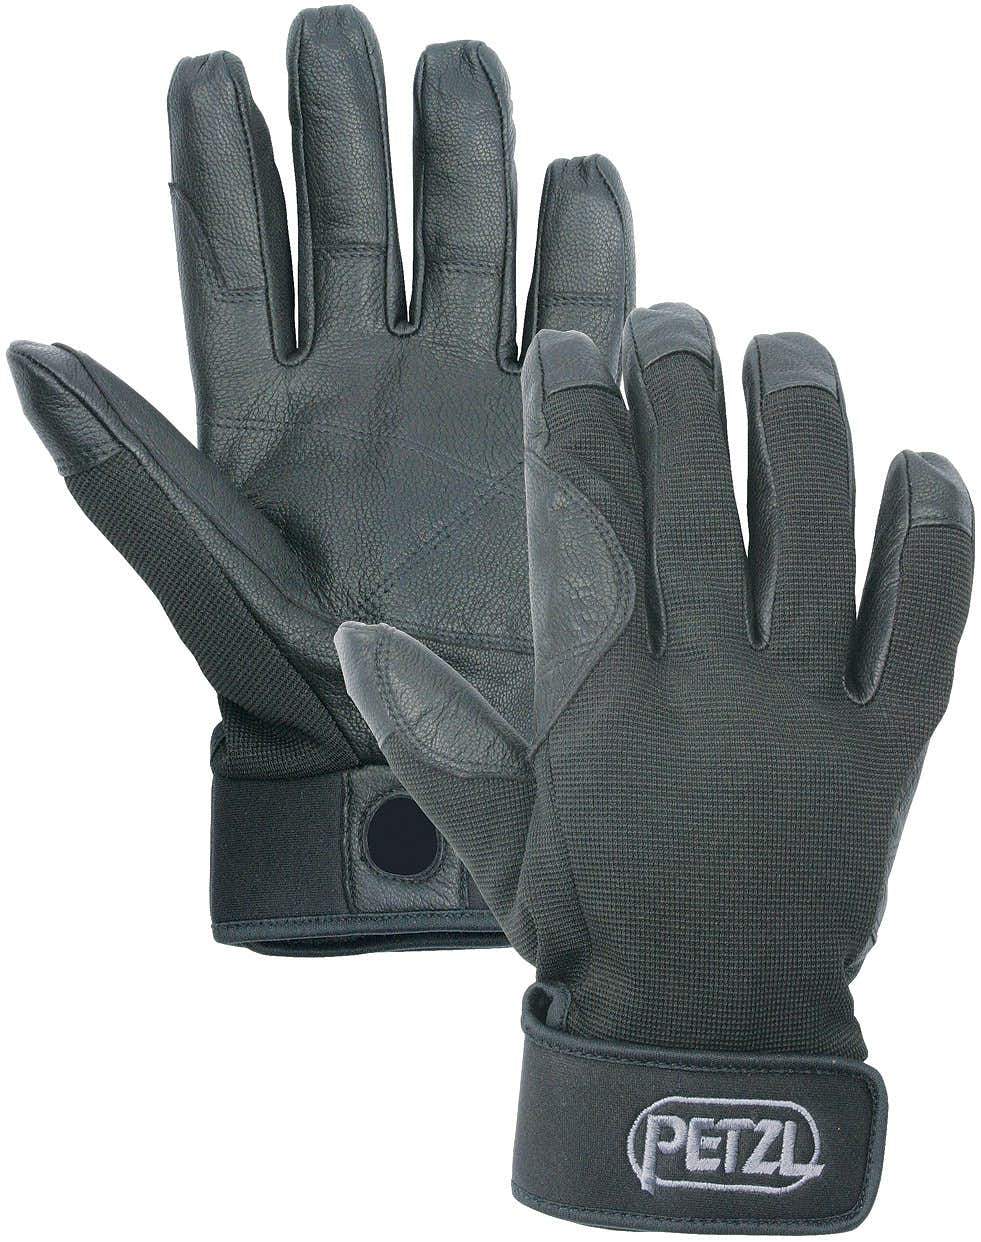 Cordex Gloves Black